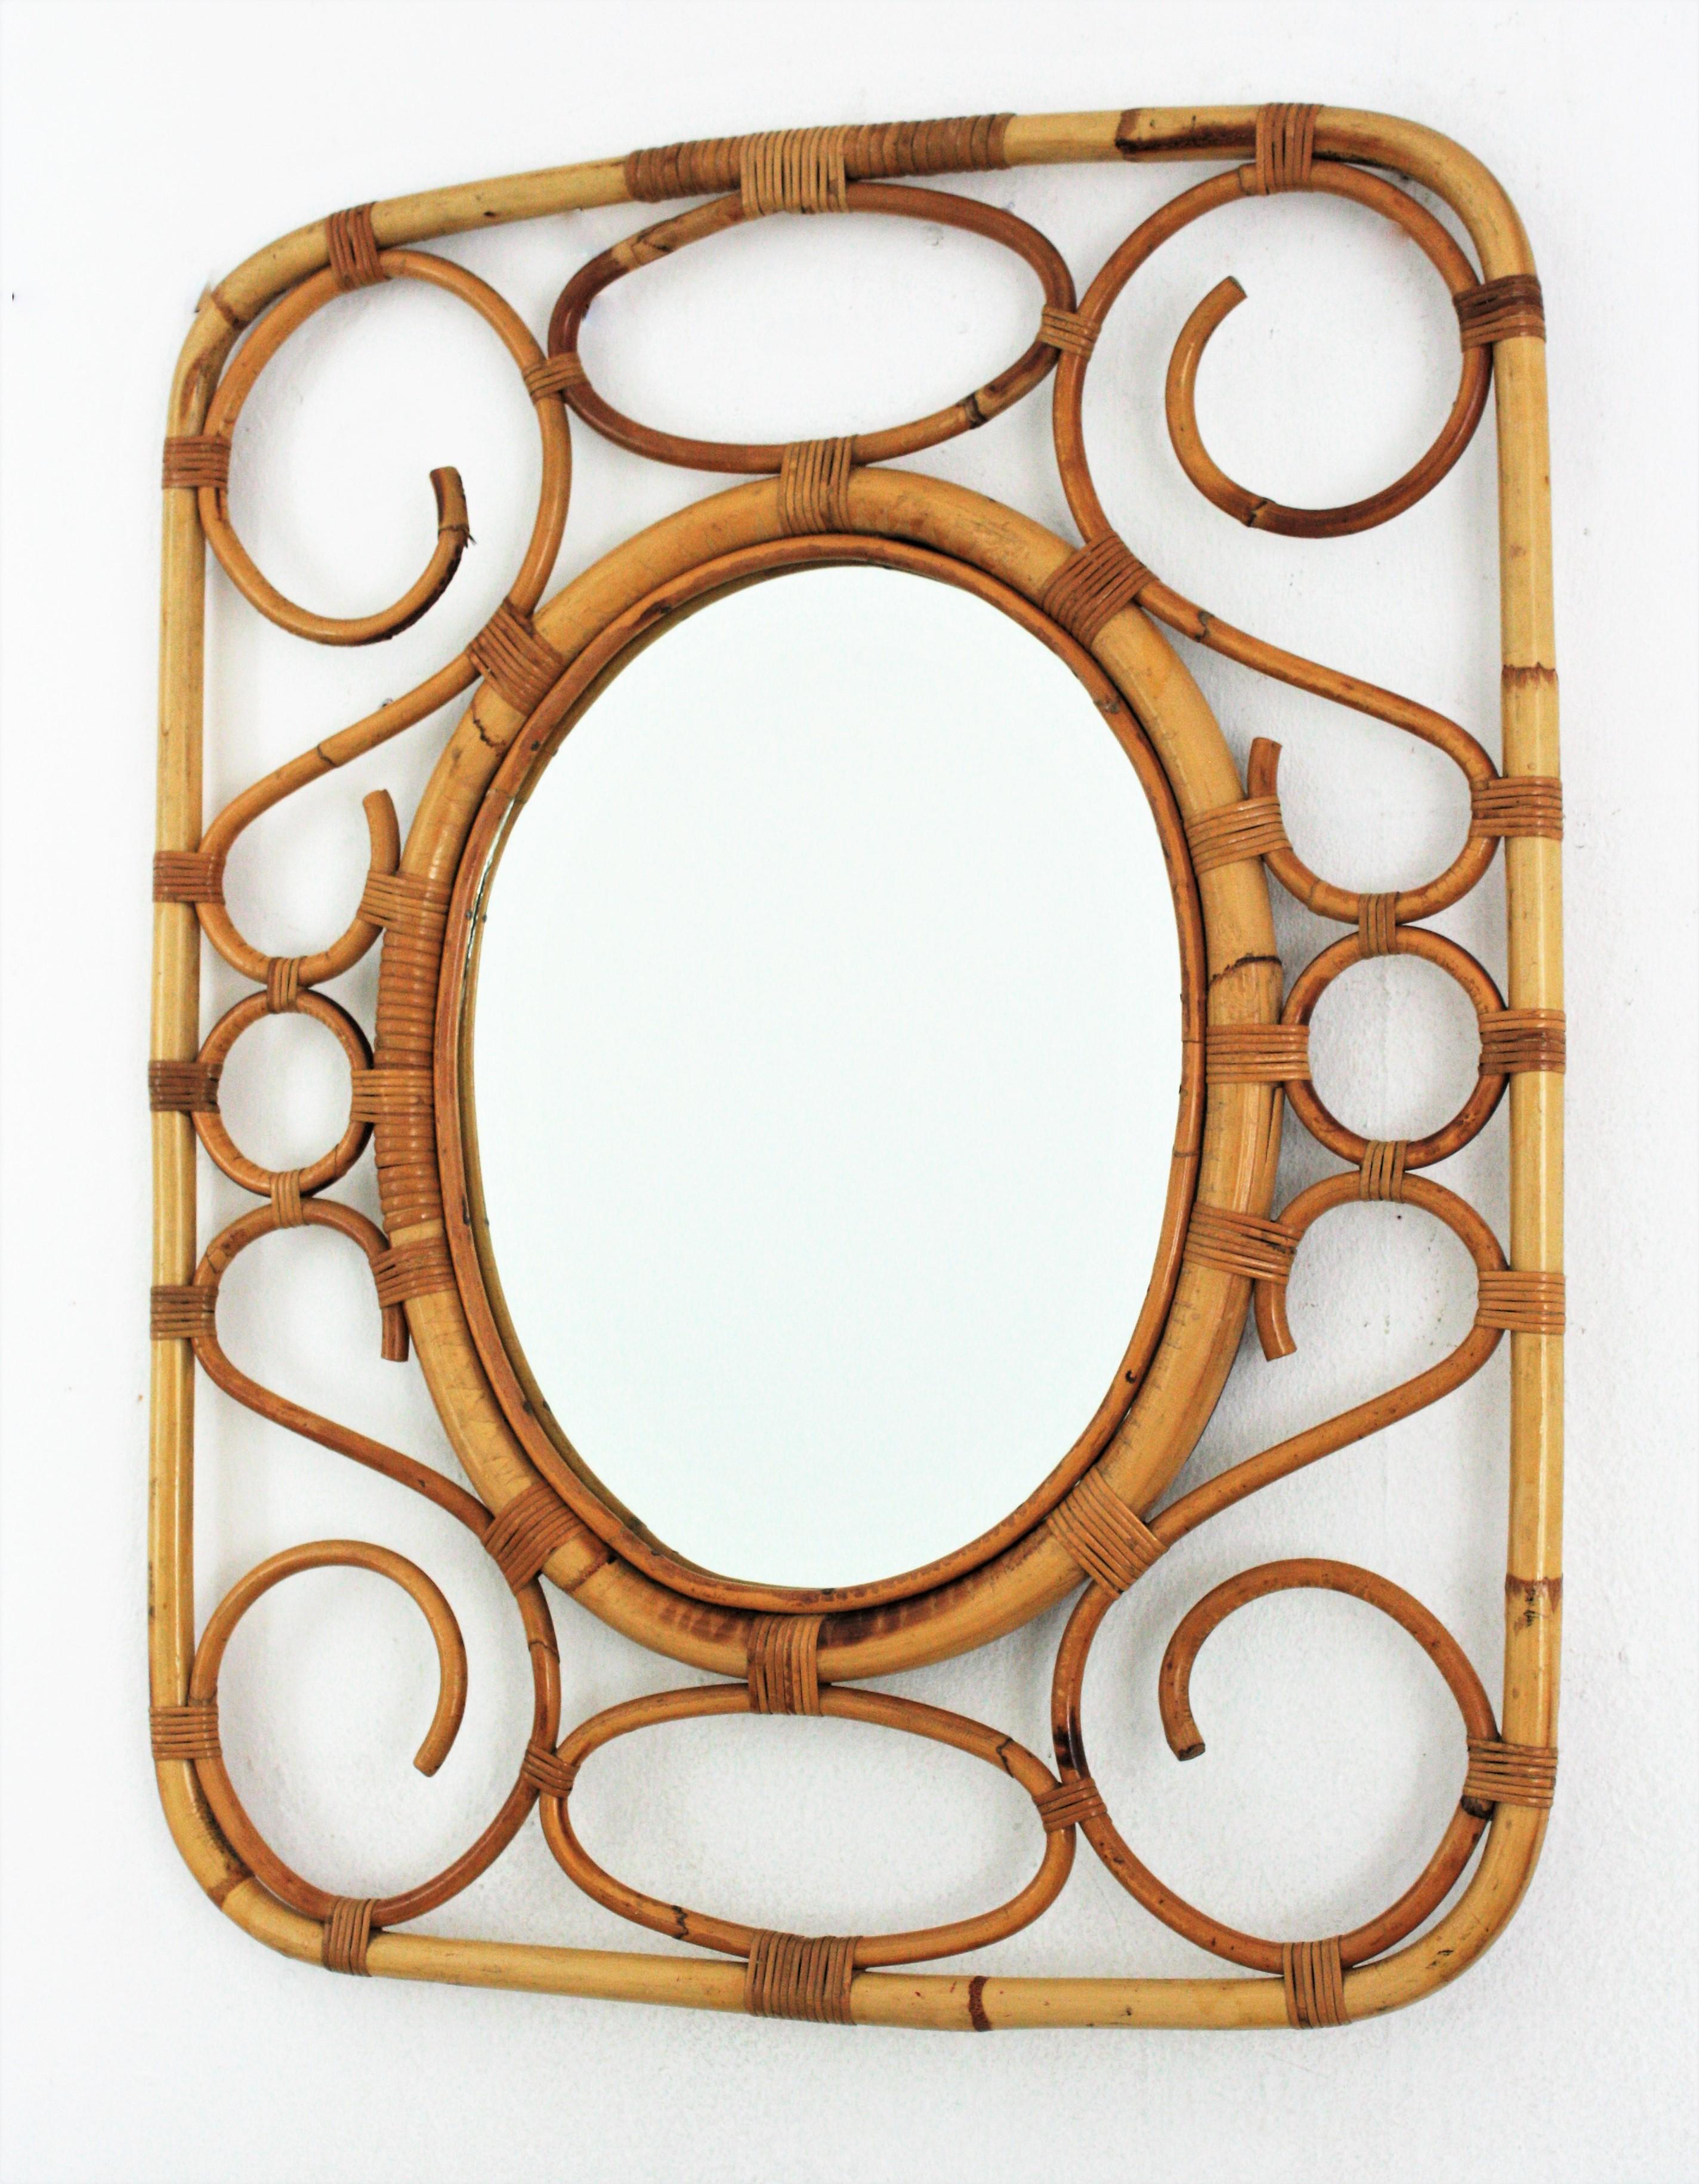 Rotin Miroir rectangulaire en bambou et rotin, moderne du milieu du siècle dernier